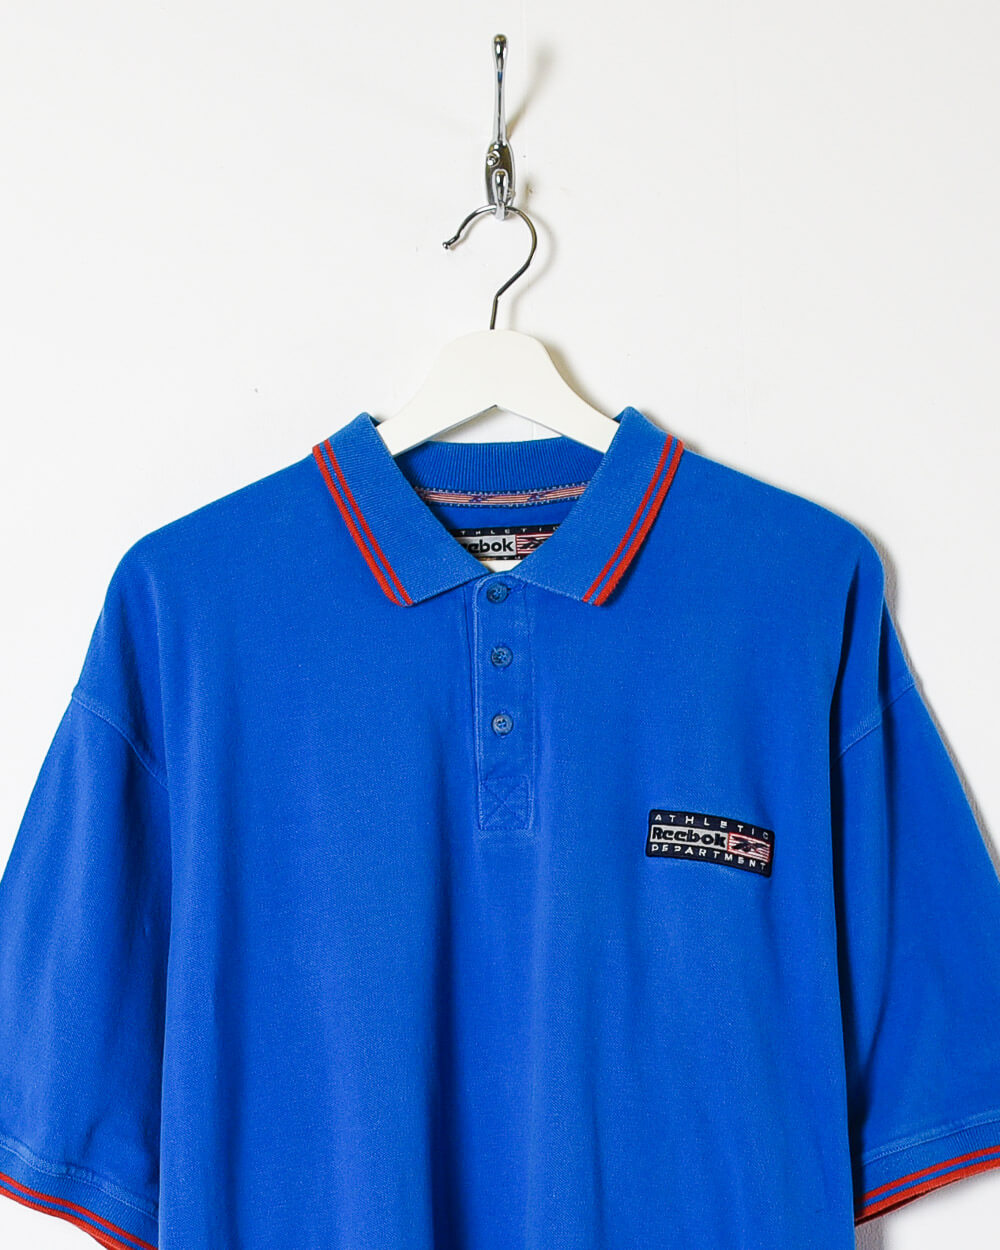 Blue Reebok Athletic Department Polo Shirt - XX-Large